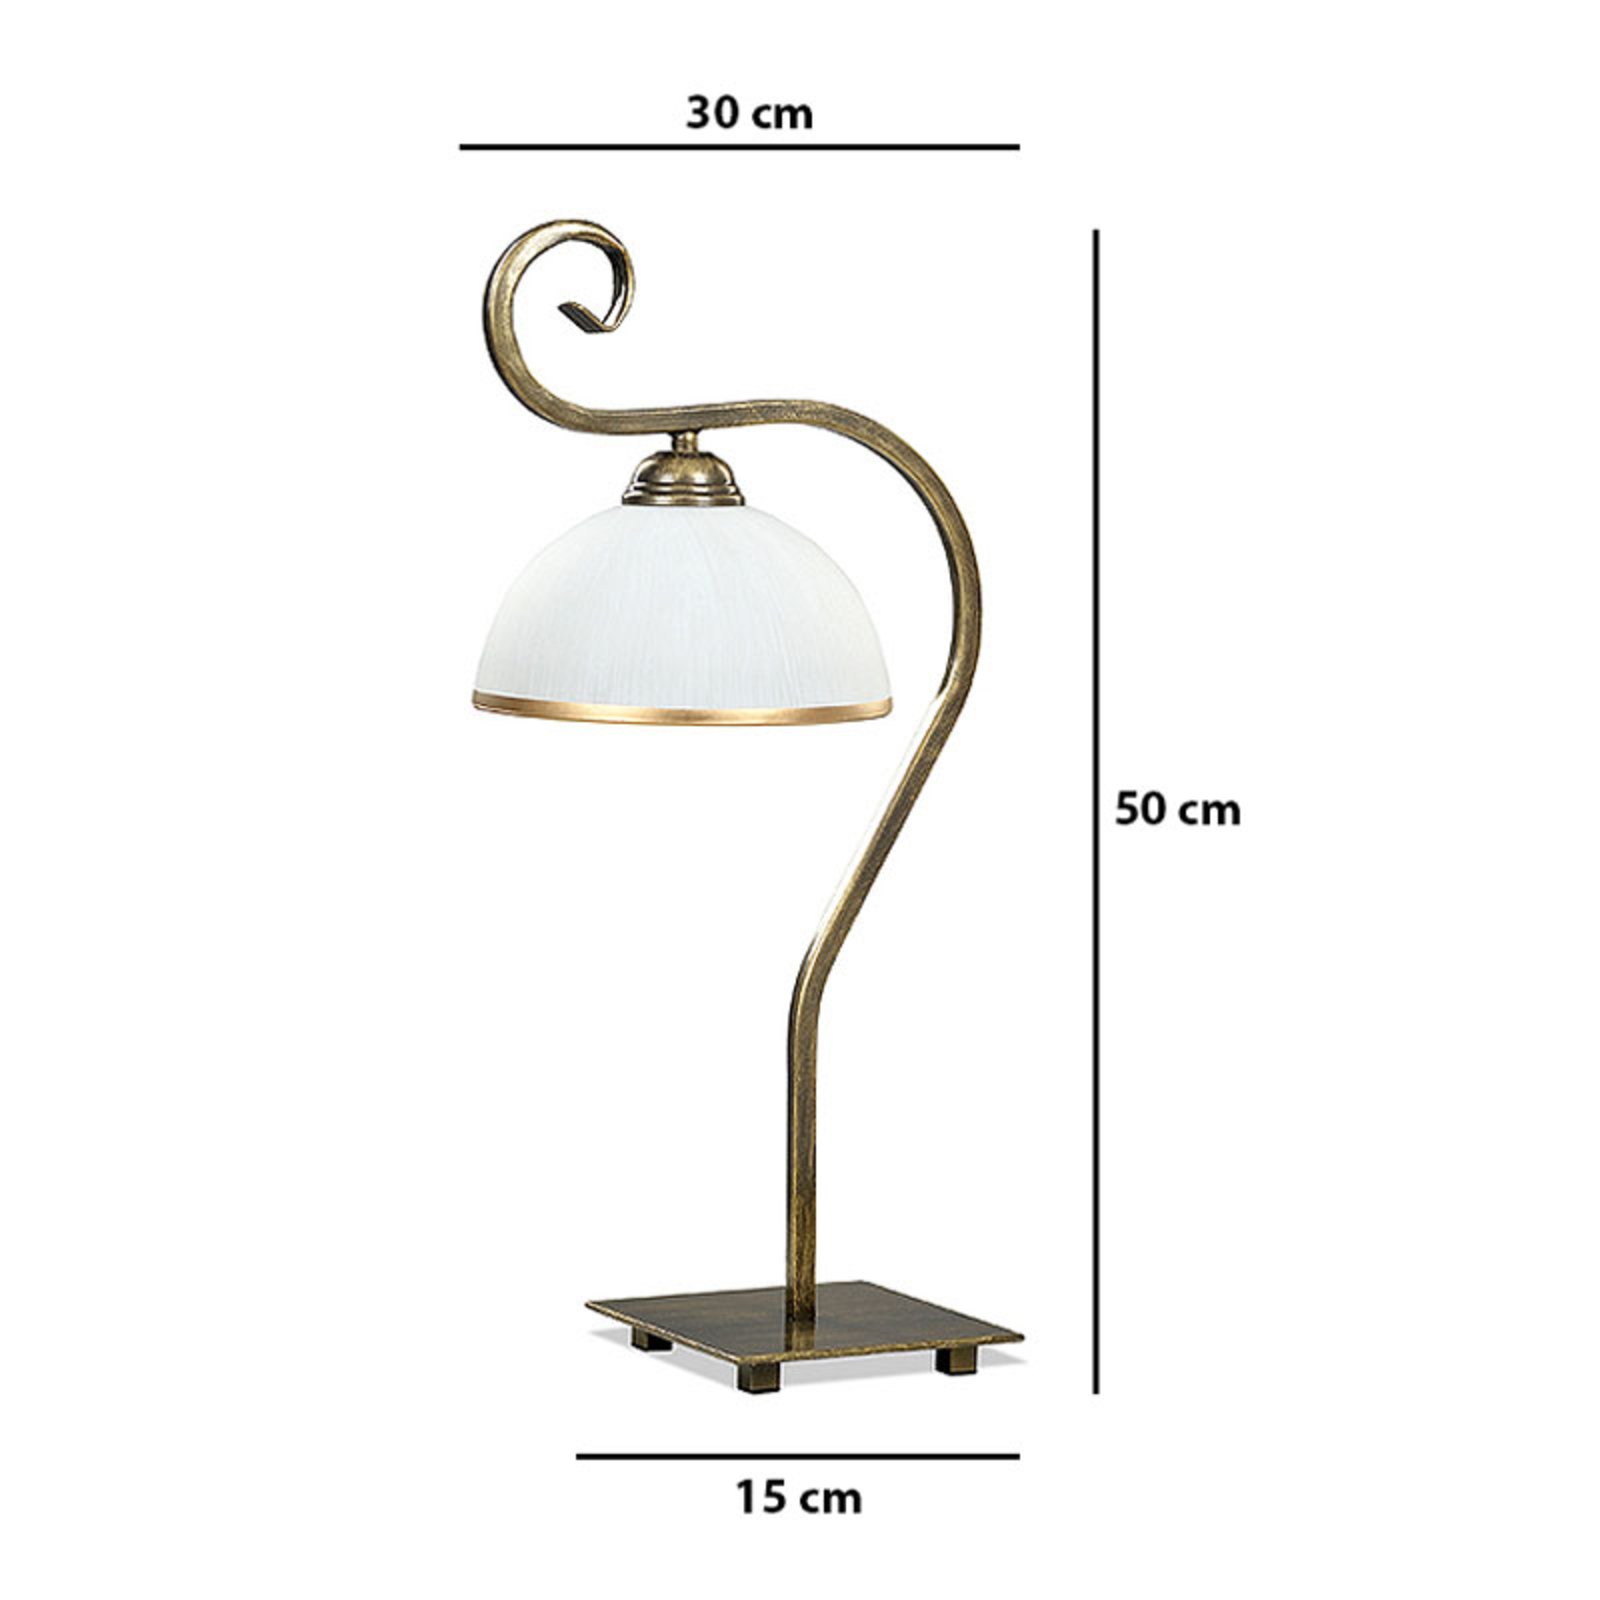 Wivara LN1 table lamp in a classic design, gold